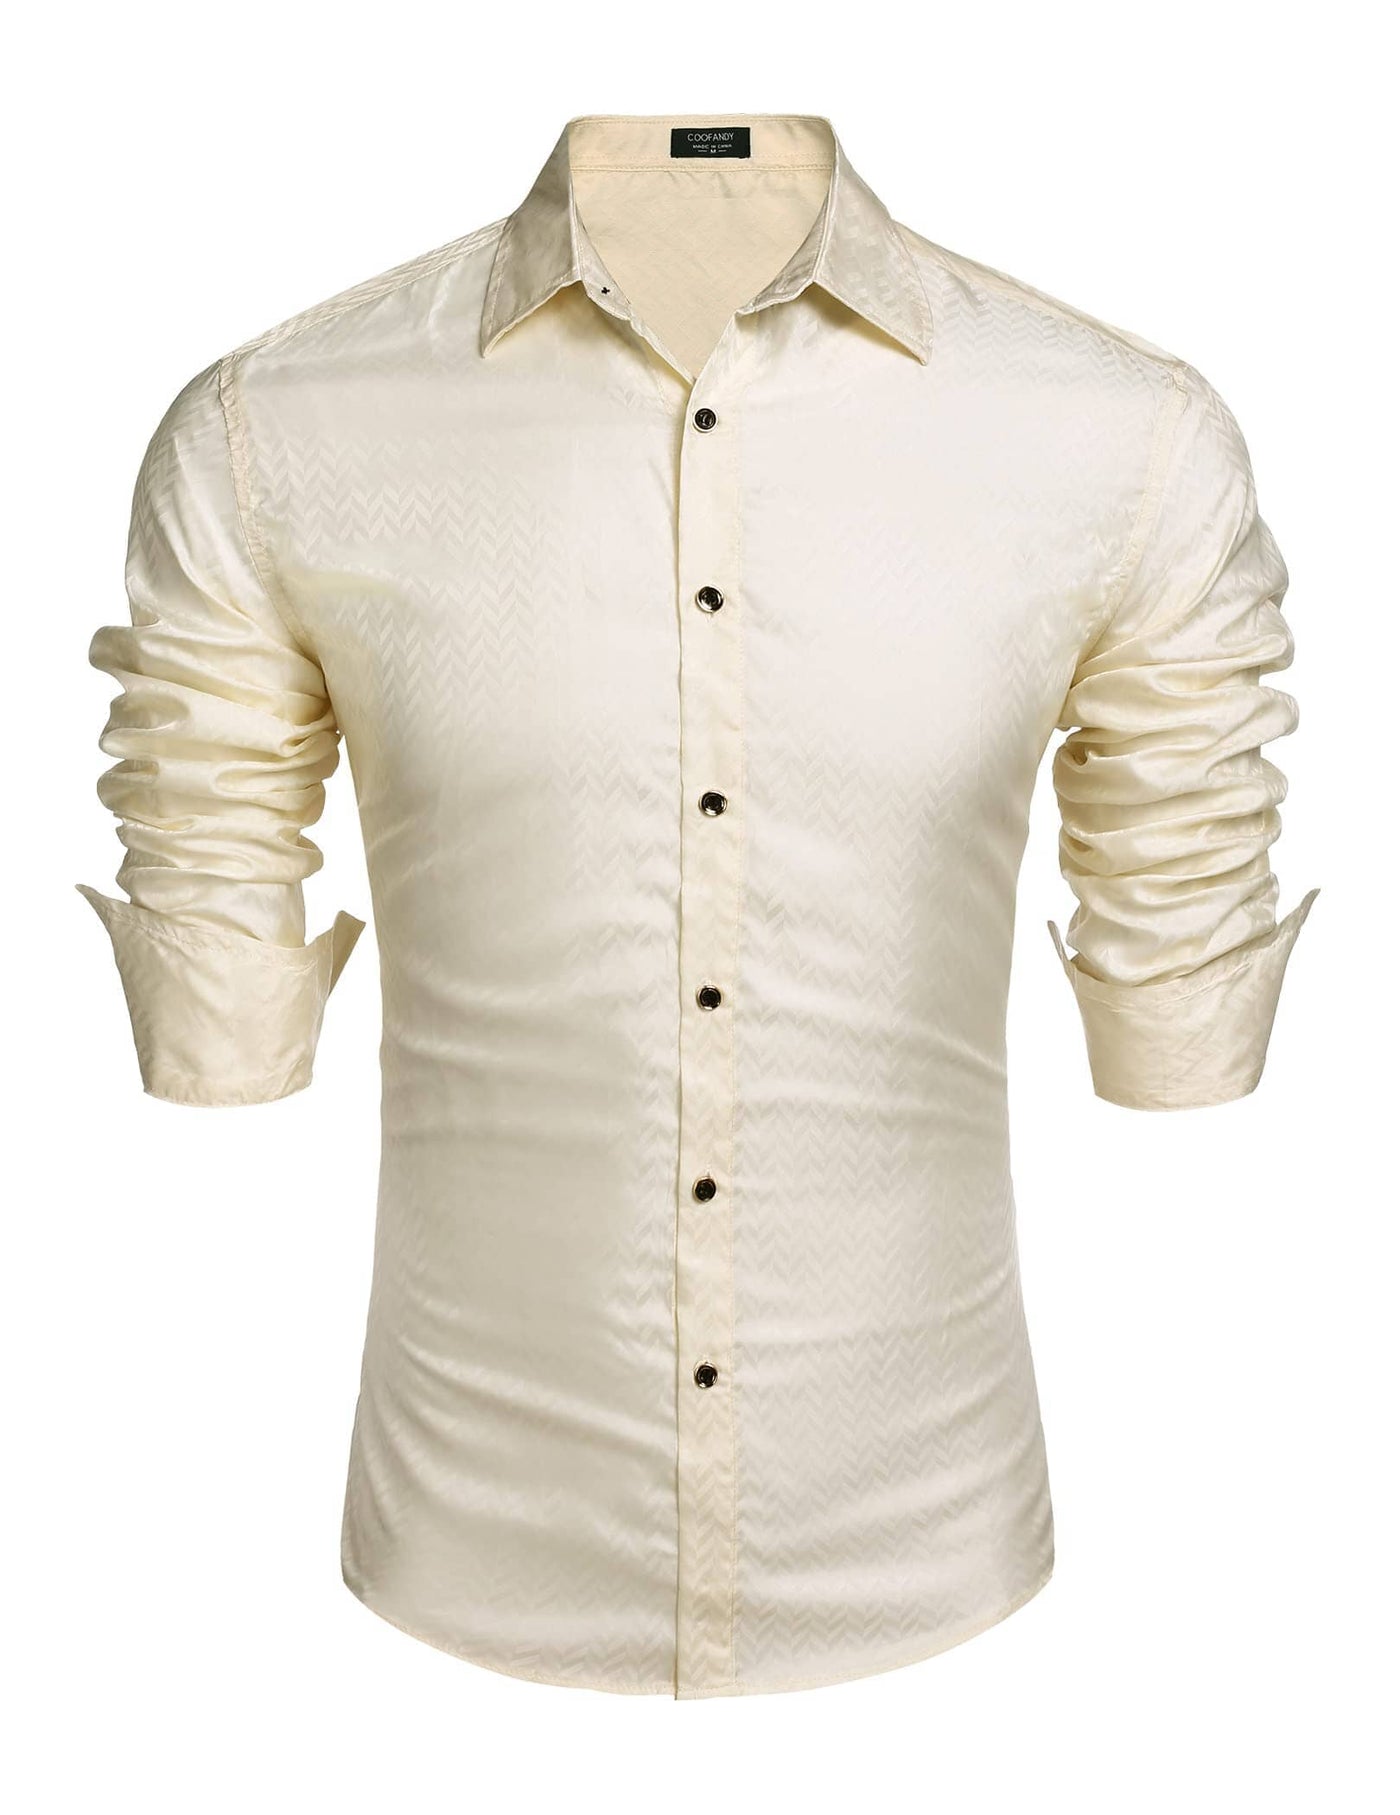 Coofandy Luxury Dress Shirt (US Only) Shirts coofandy 